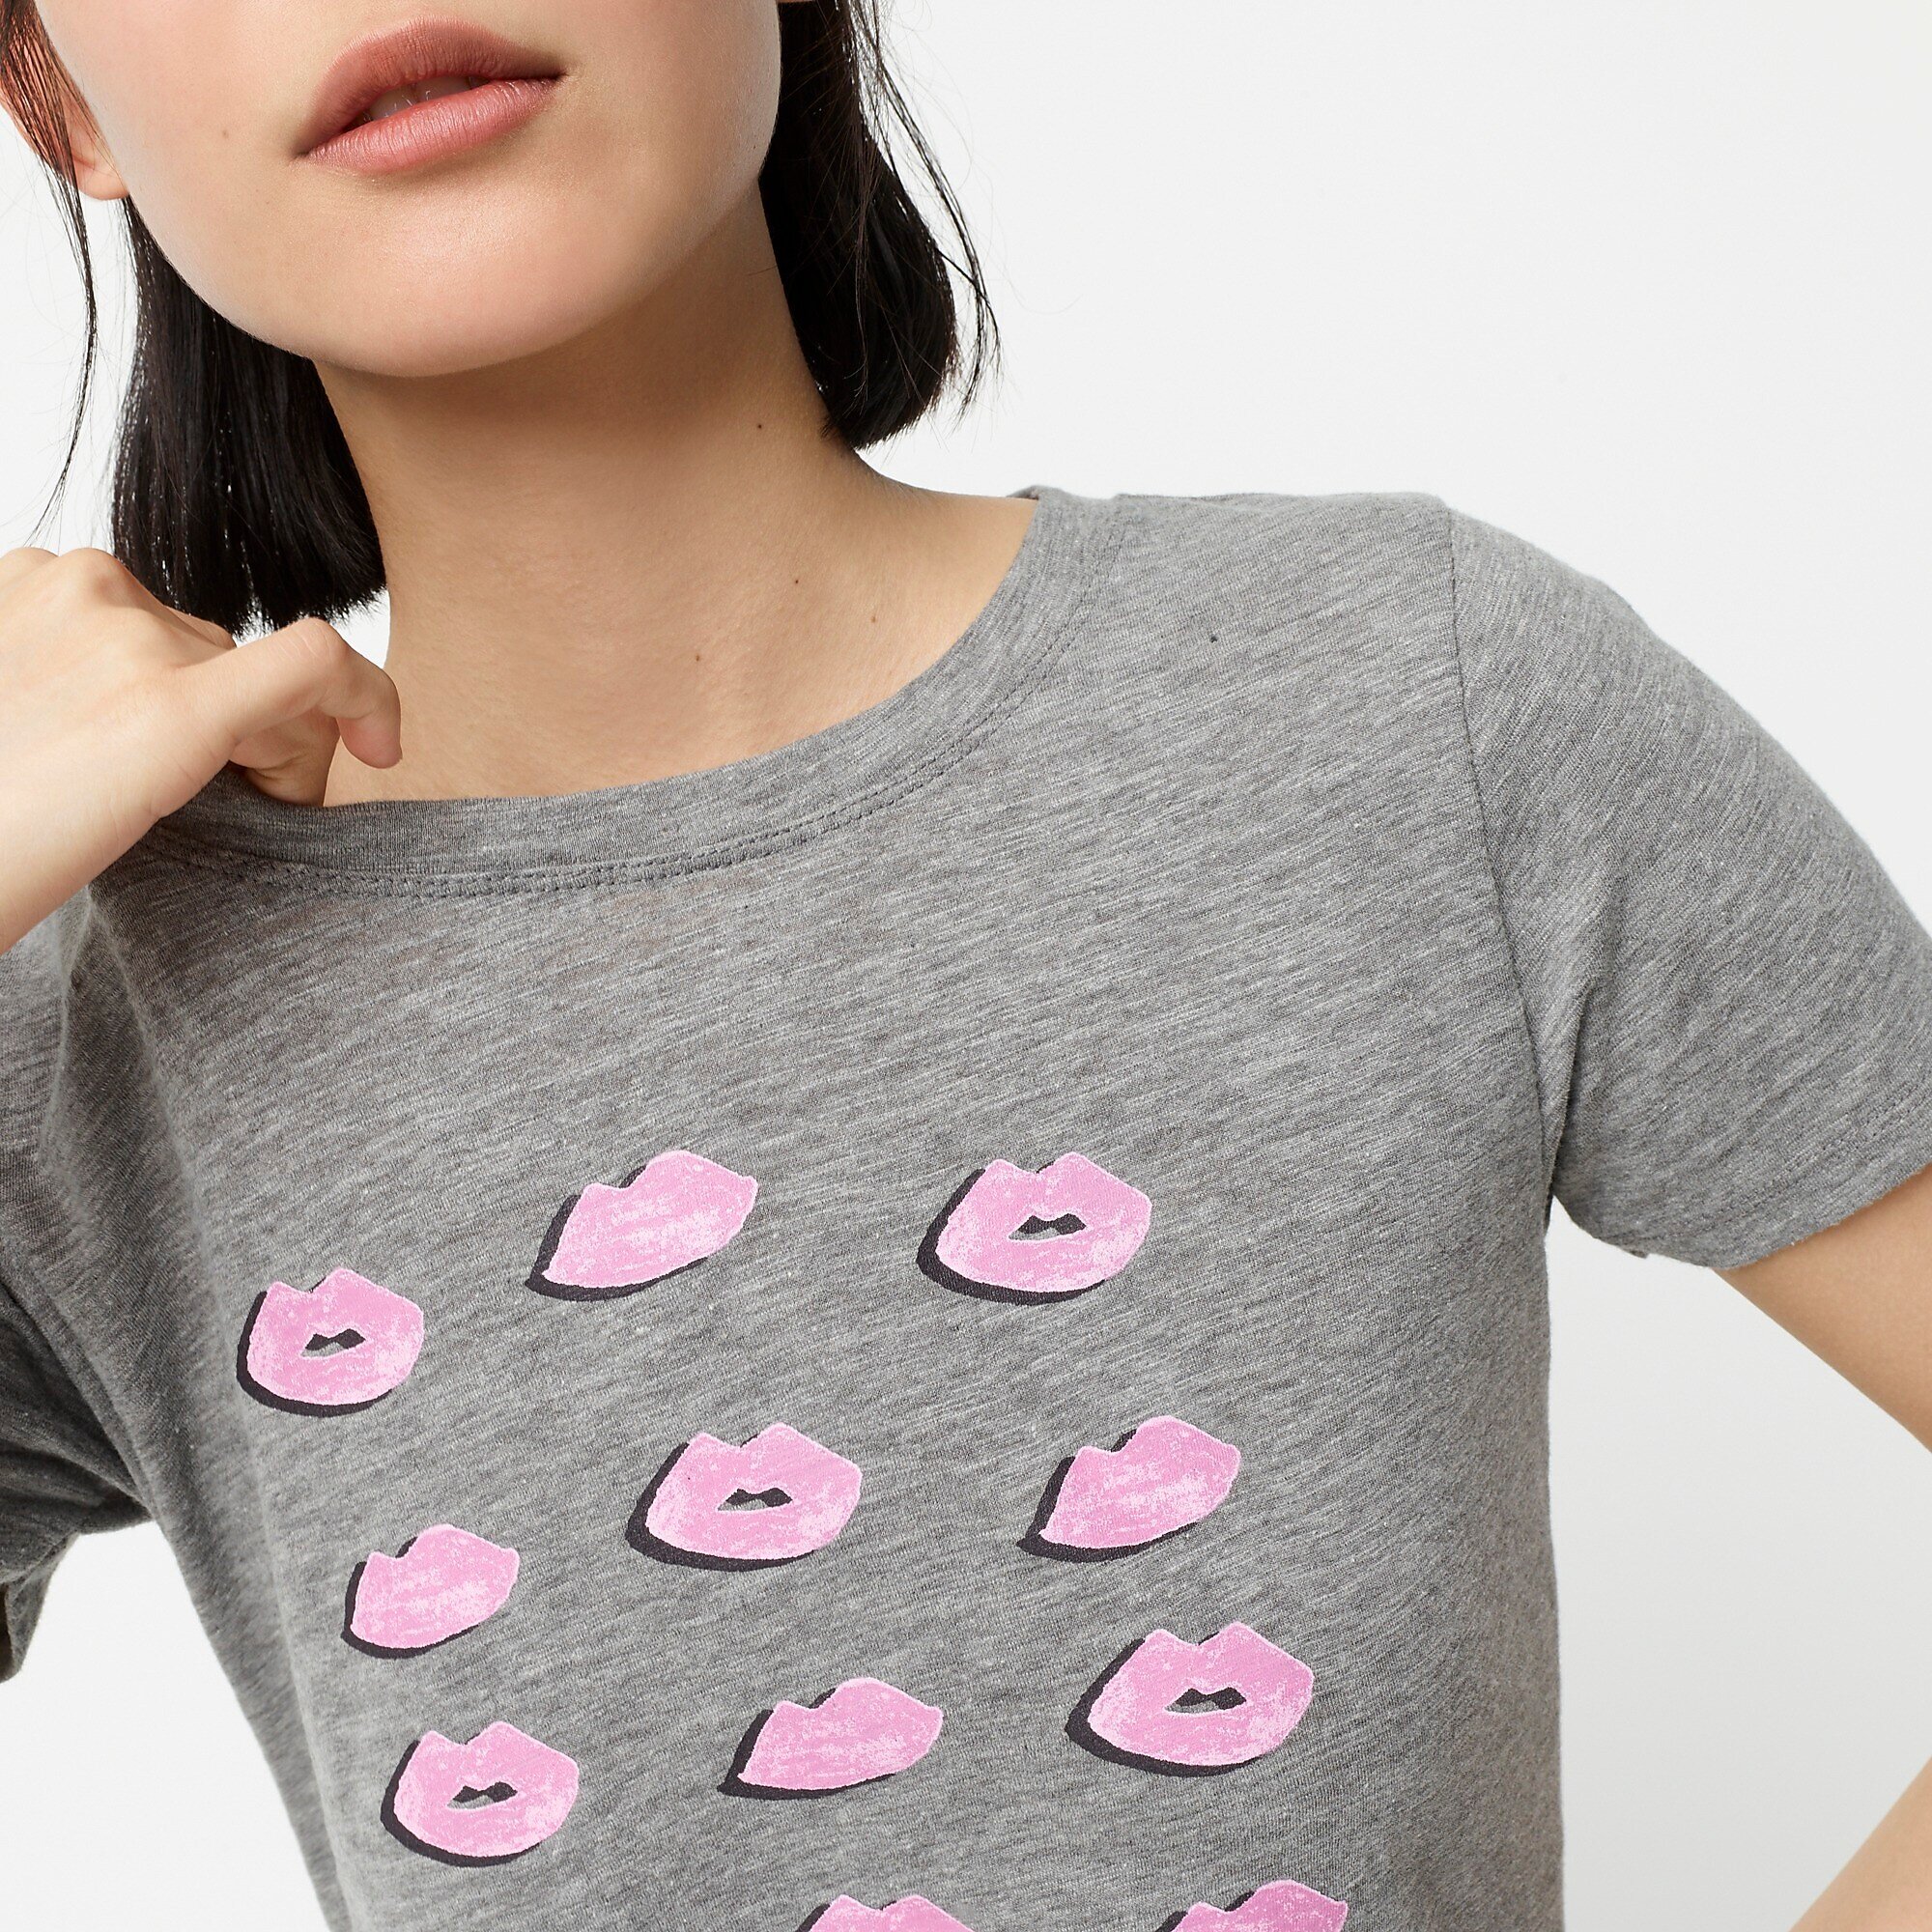 Camilla Atkins, CATKINS DESIGN for J. Crew, Summer 2019 Painted lips screen printed  tee shirt.jpeg